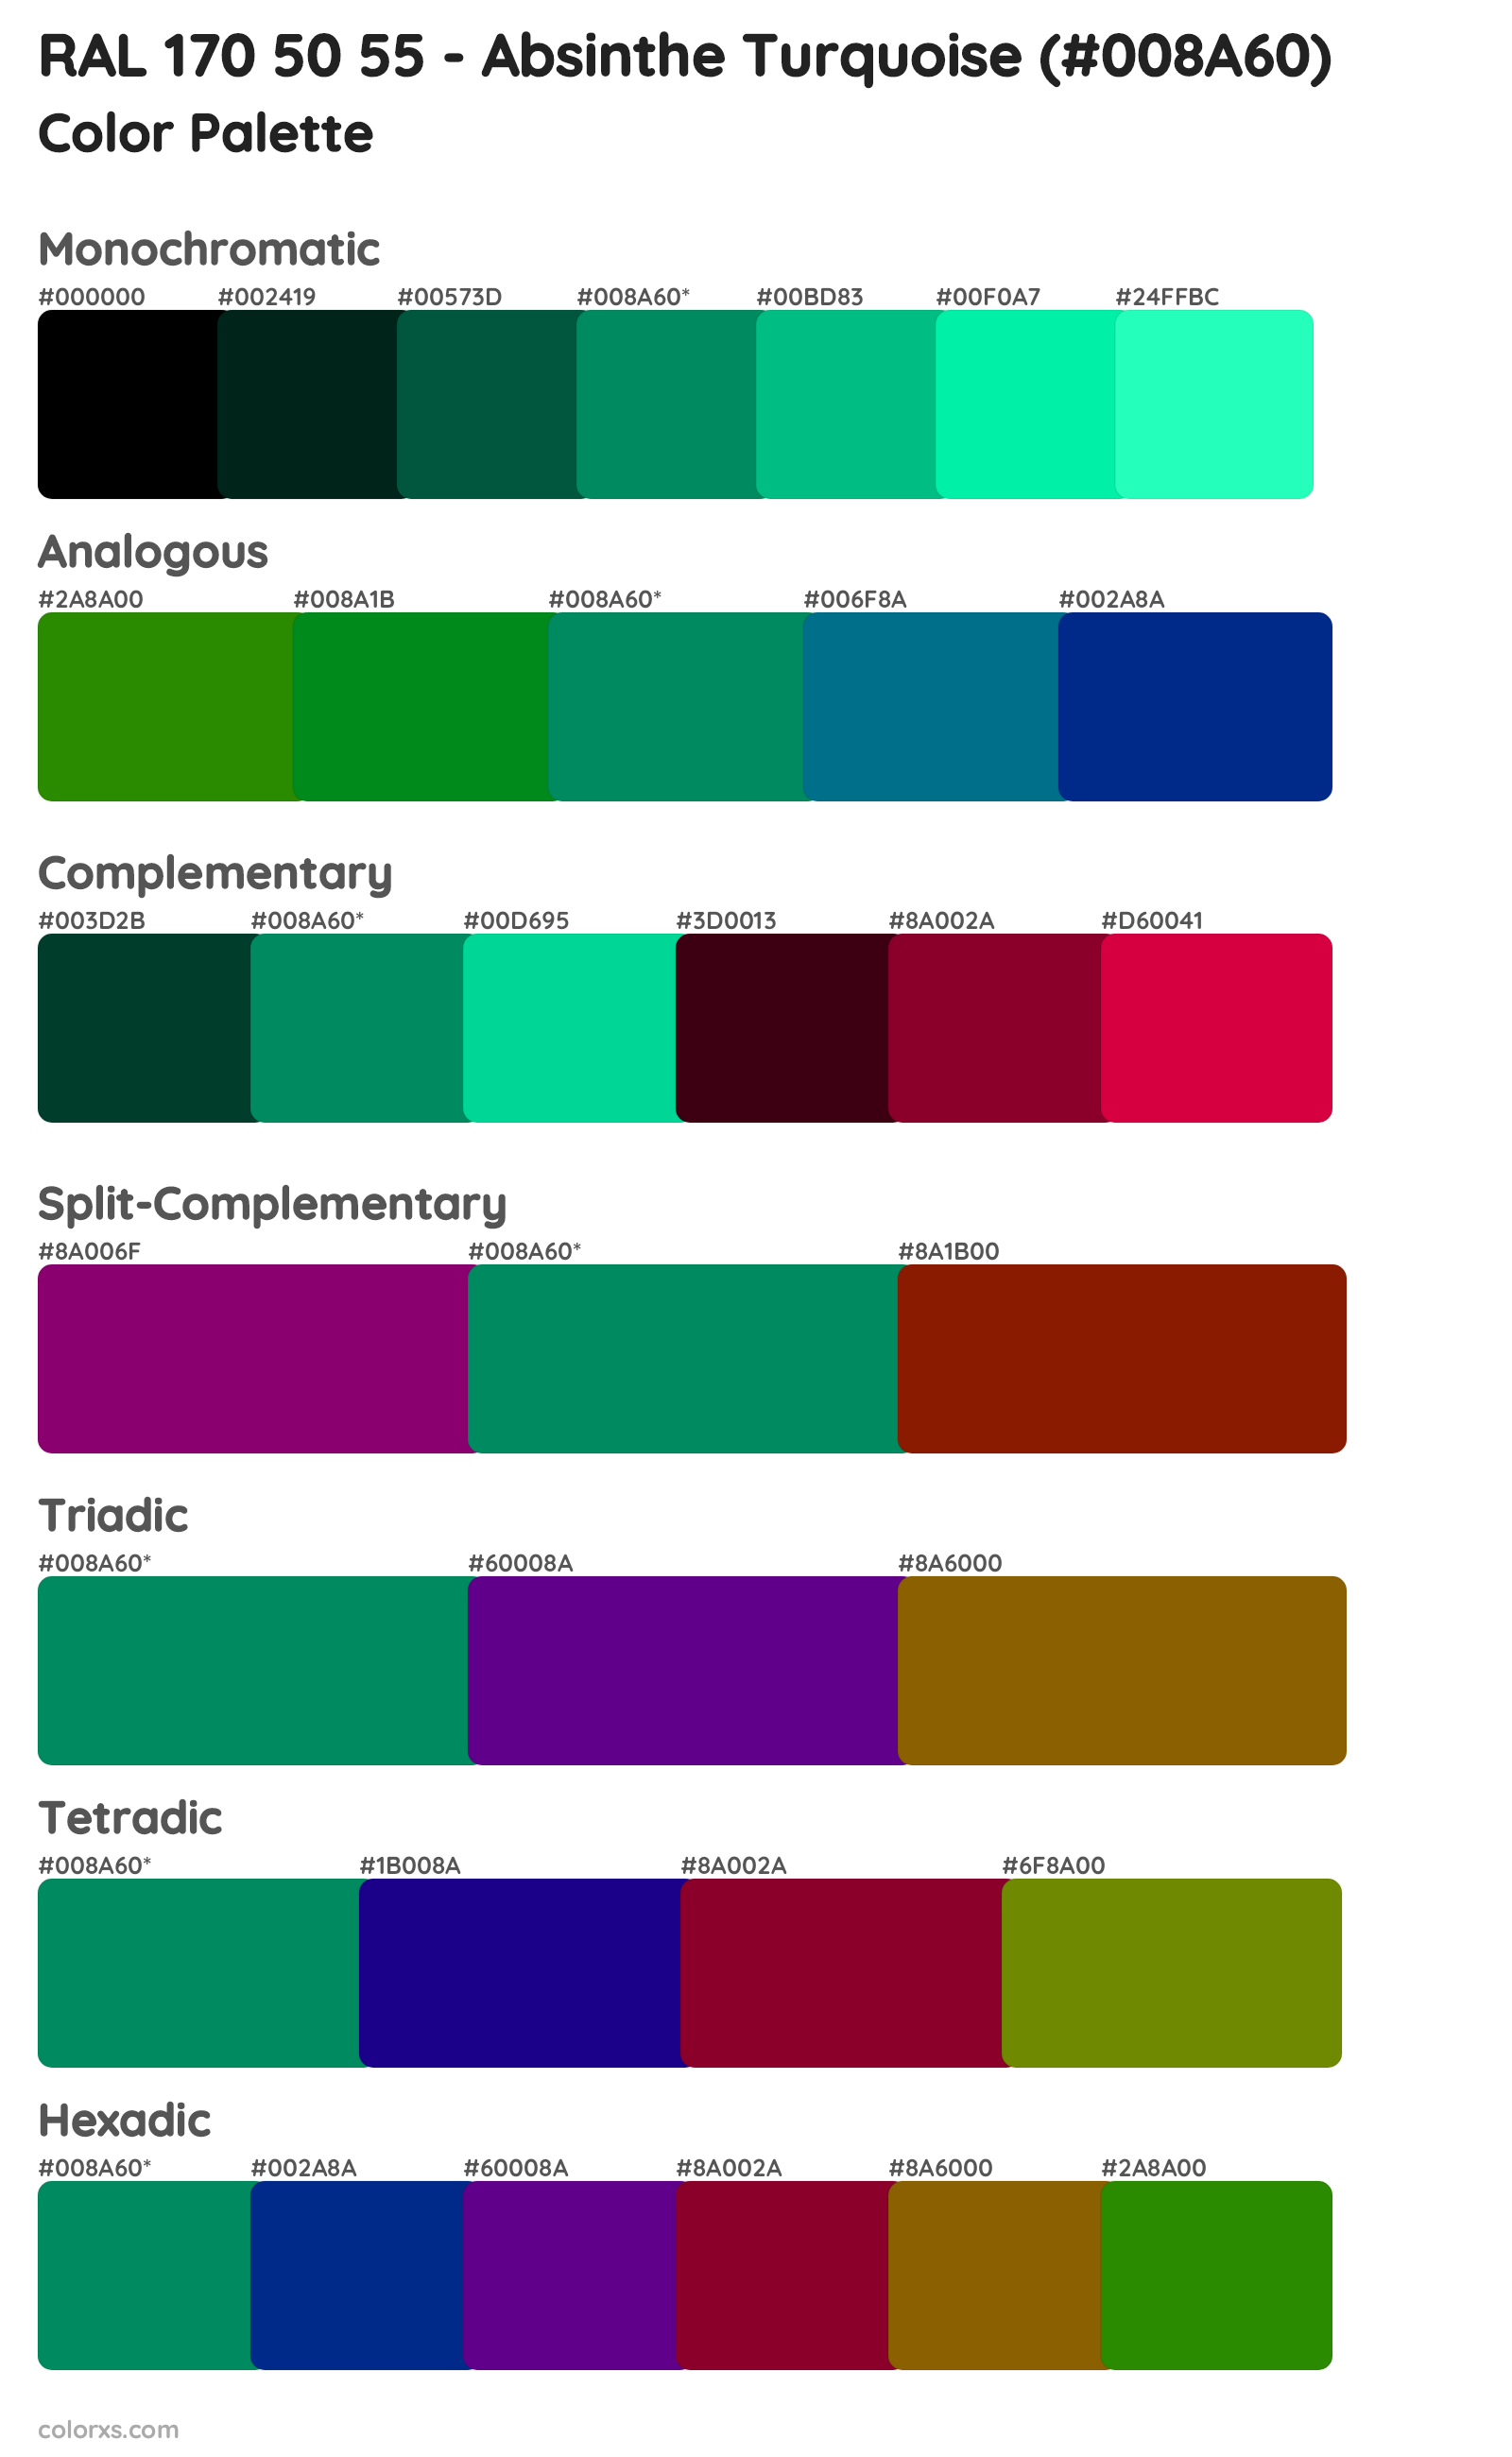 RAL 170 50 55 - Absinthe Turquoise Color Scheme Palettes